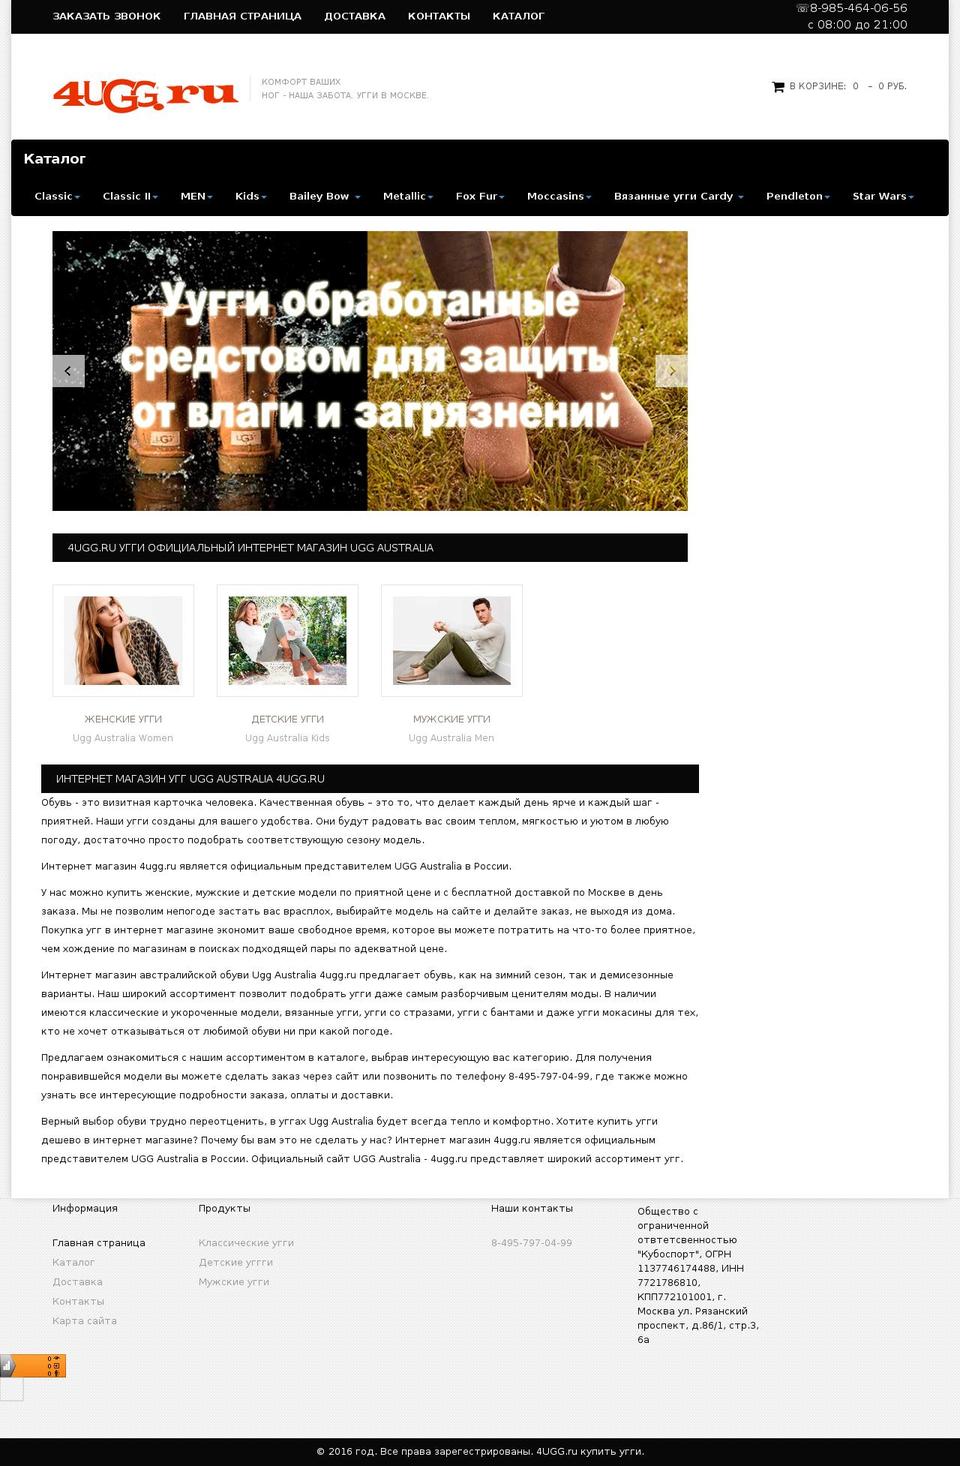 4ugg.ru shopify website screenshot